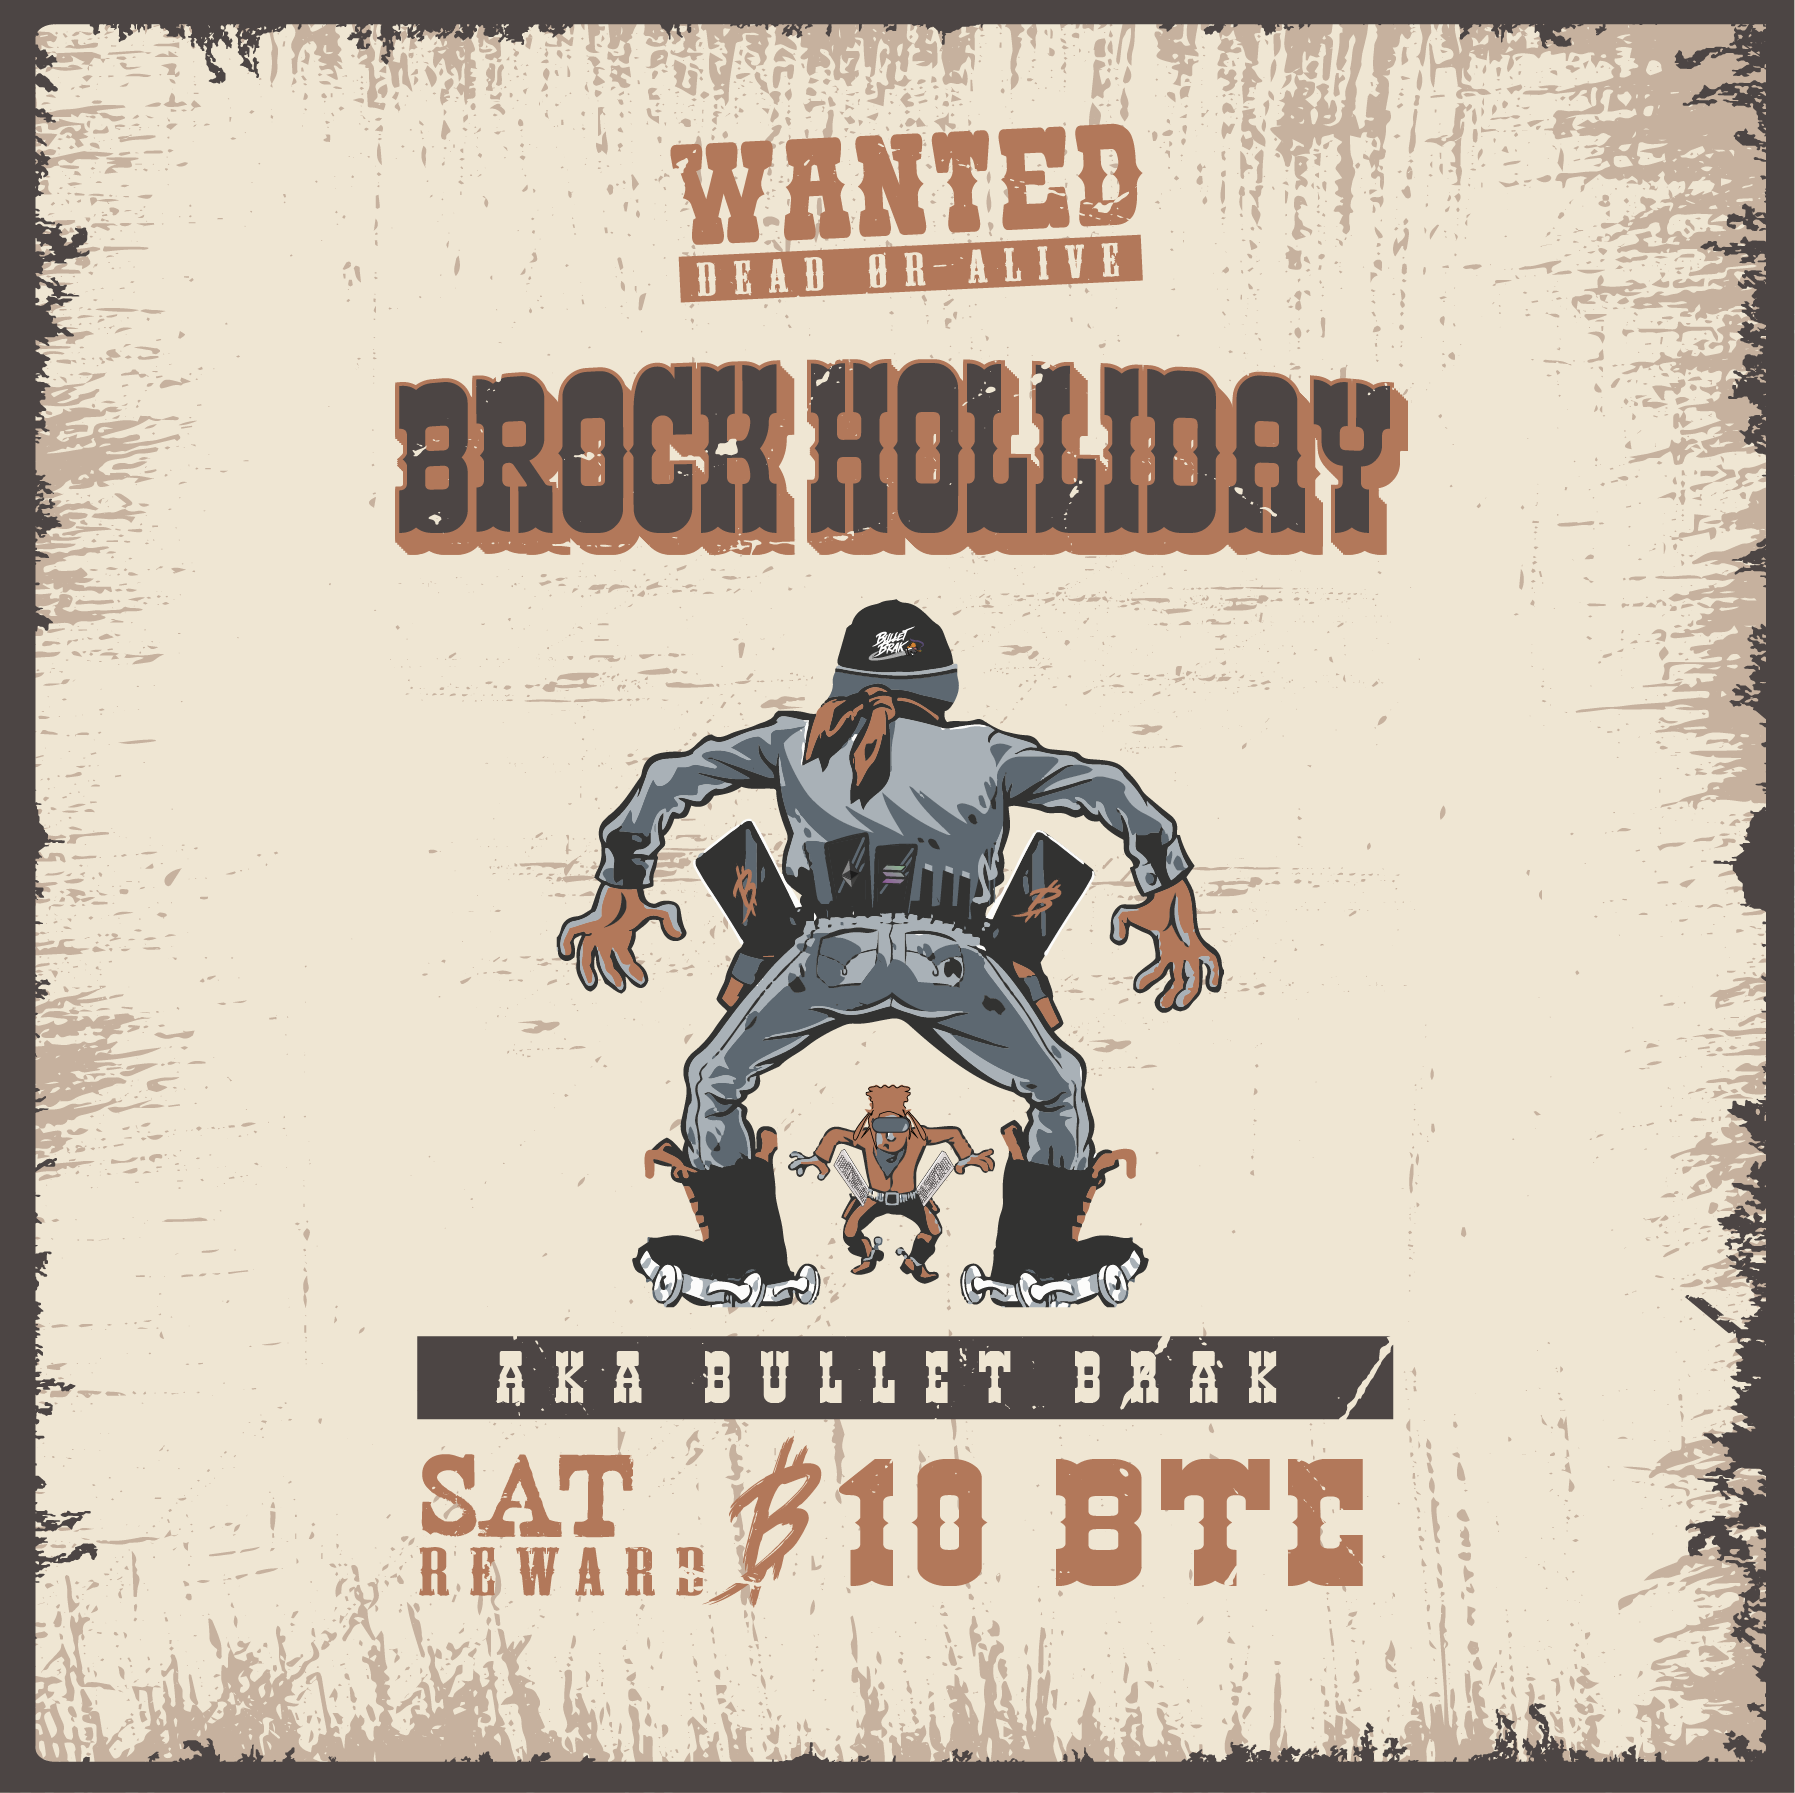 Bullet Brak Drops 'Brock Holliday' Album